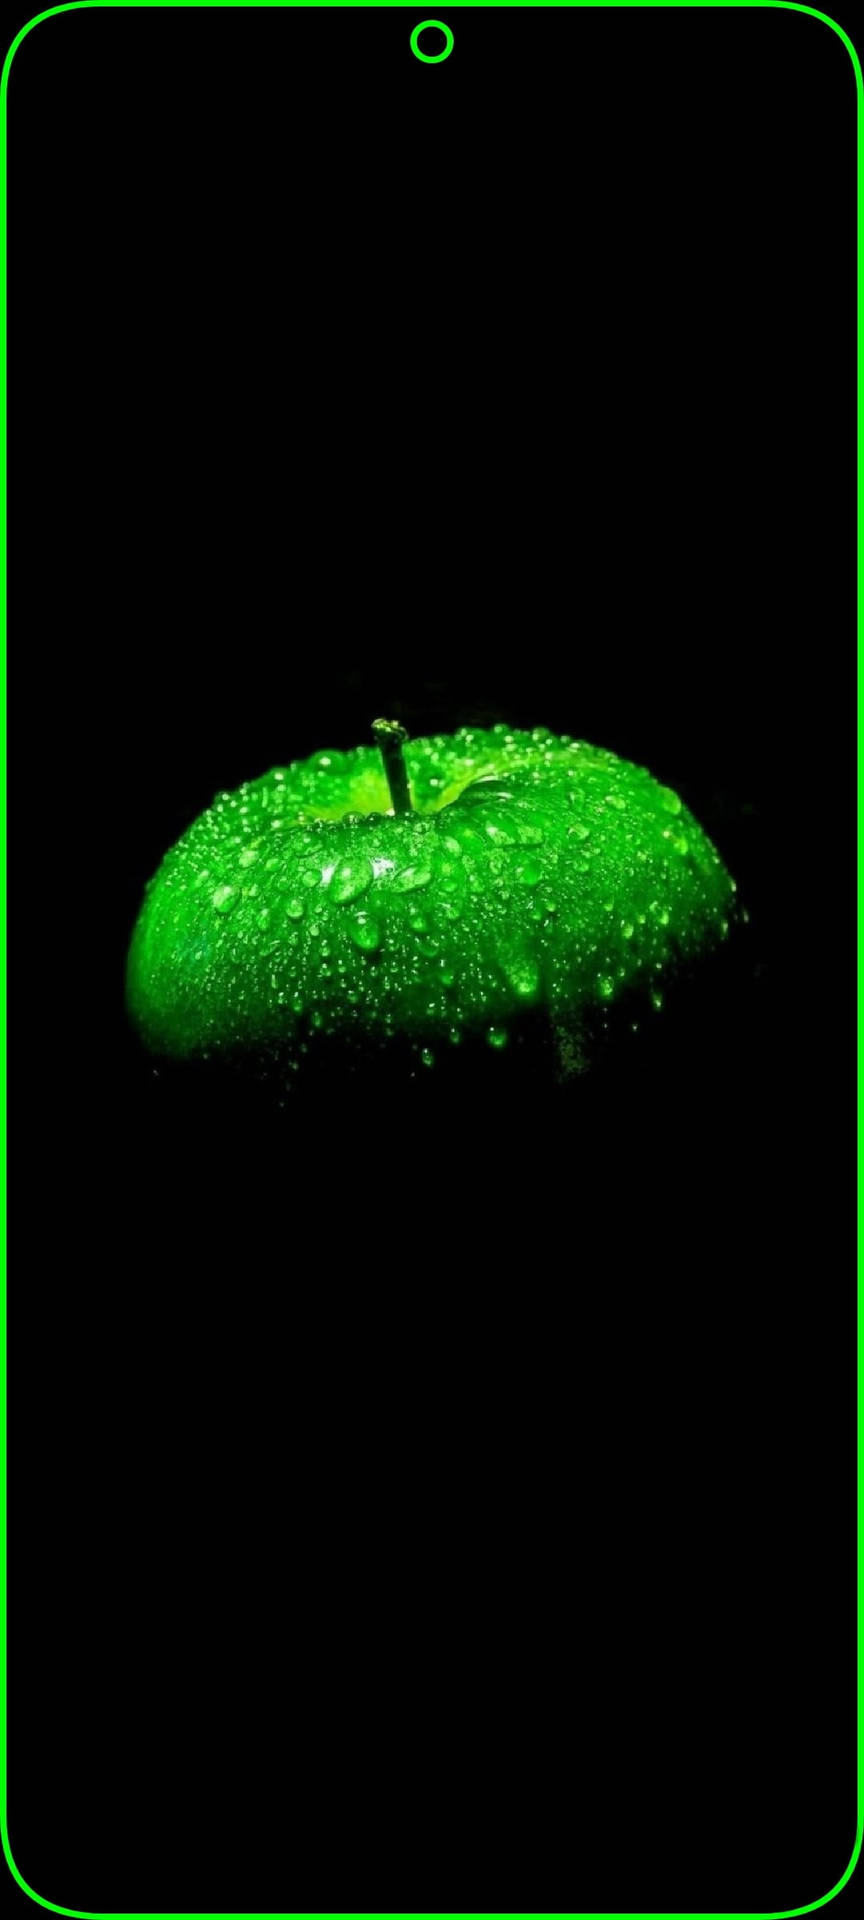 Poco X2 Green Apple Wallpaper